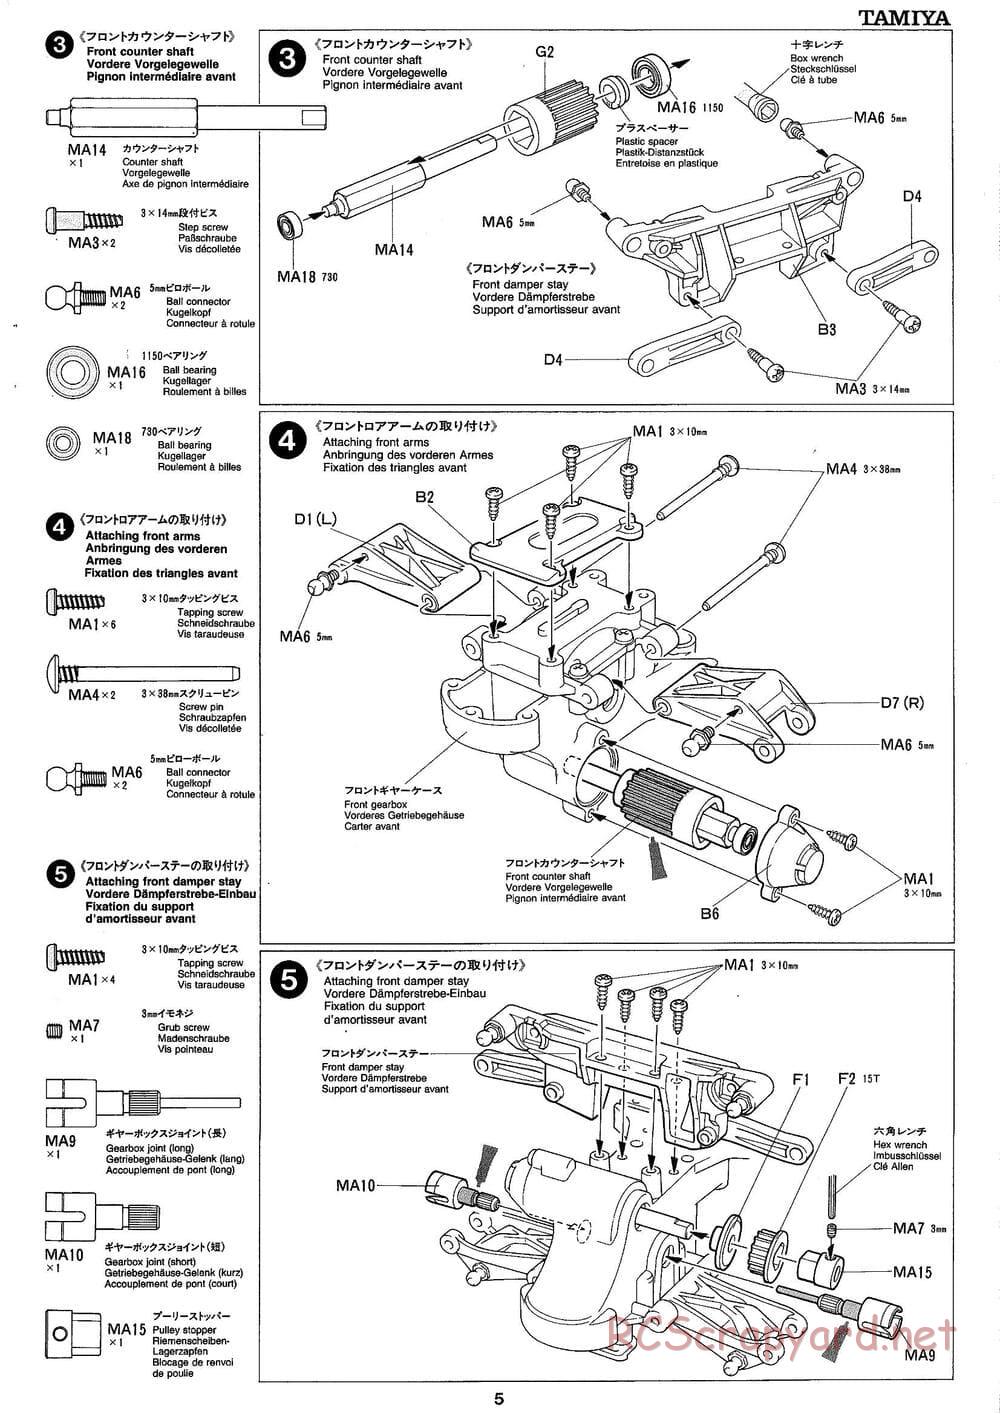 Tamiya - Mobil 1 NSX - TA-03R Chassis - Manual - Page 5